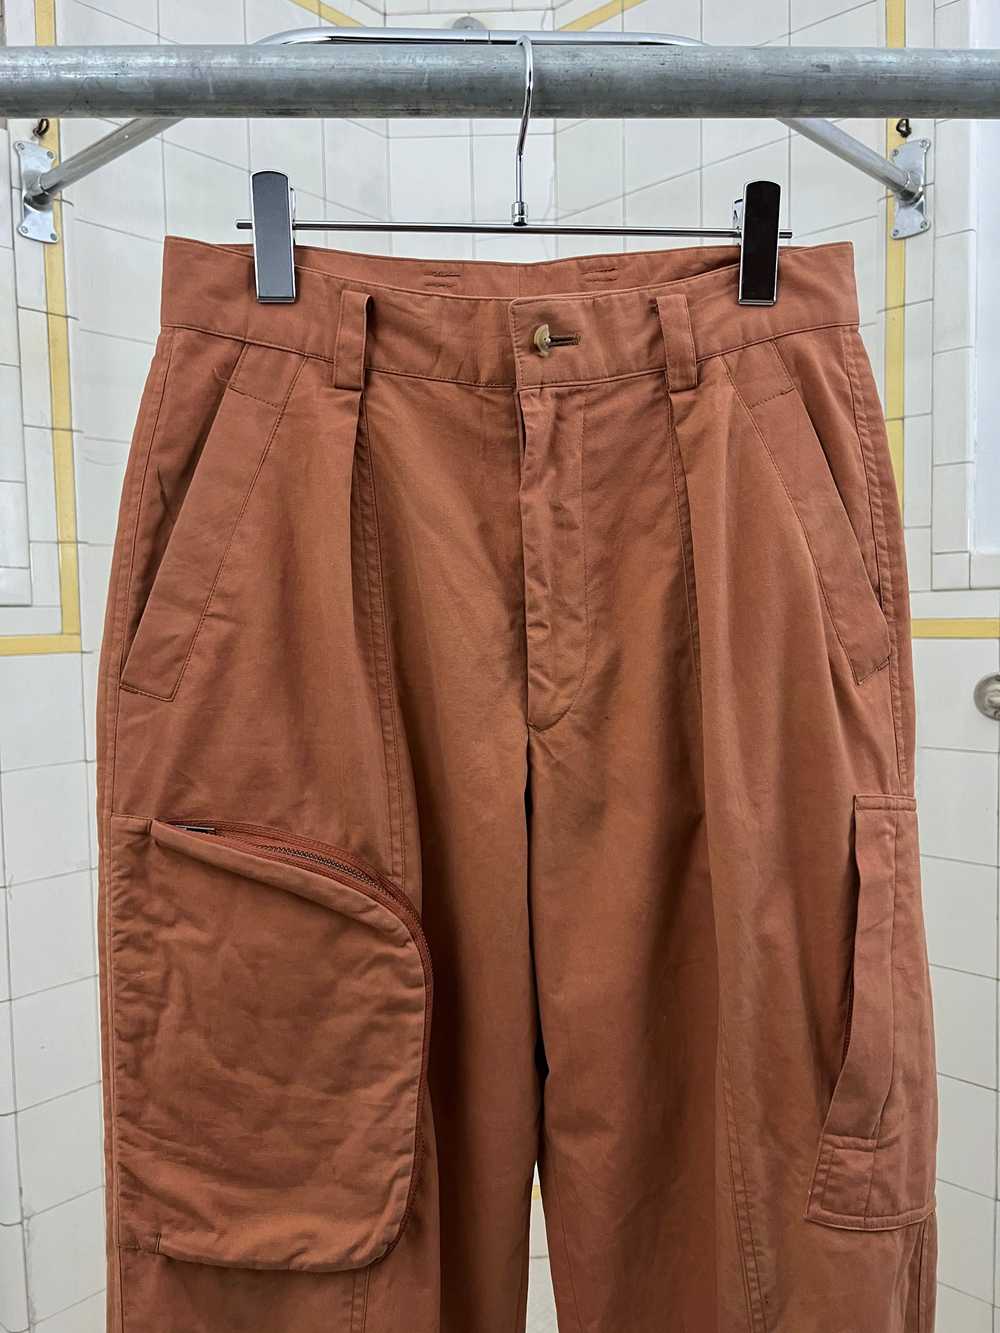 ss1993 Issey Miyake Cargo Pants - Size M - image 8